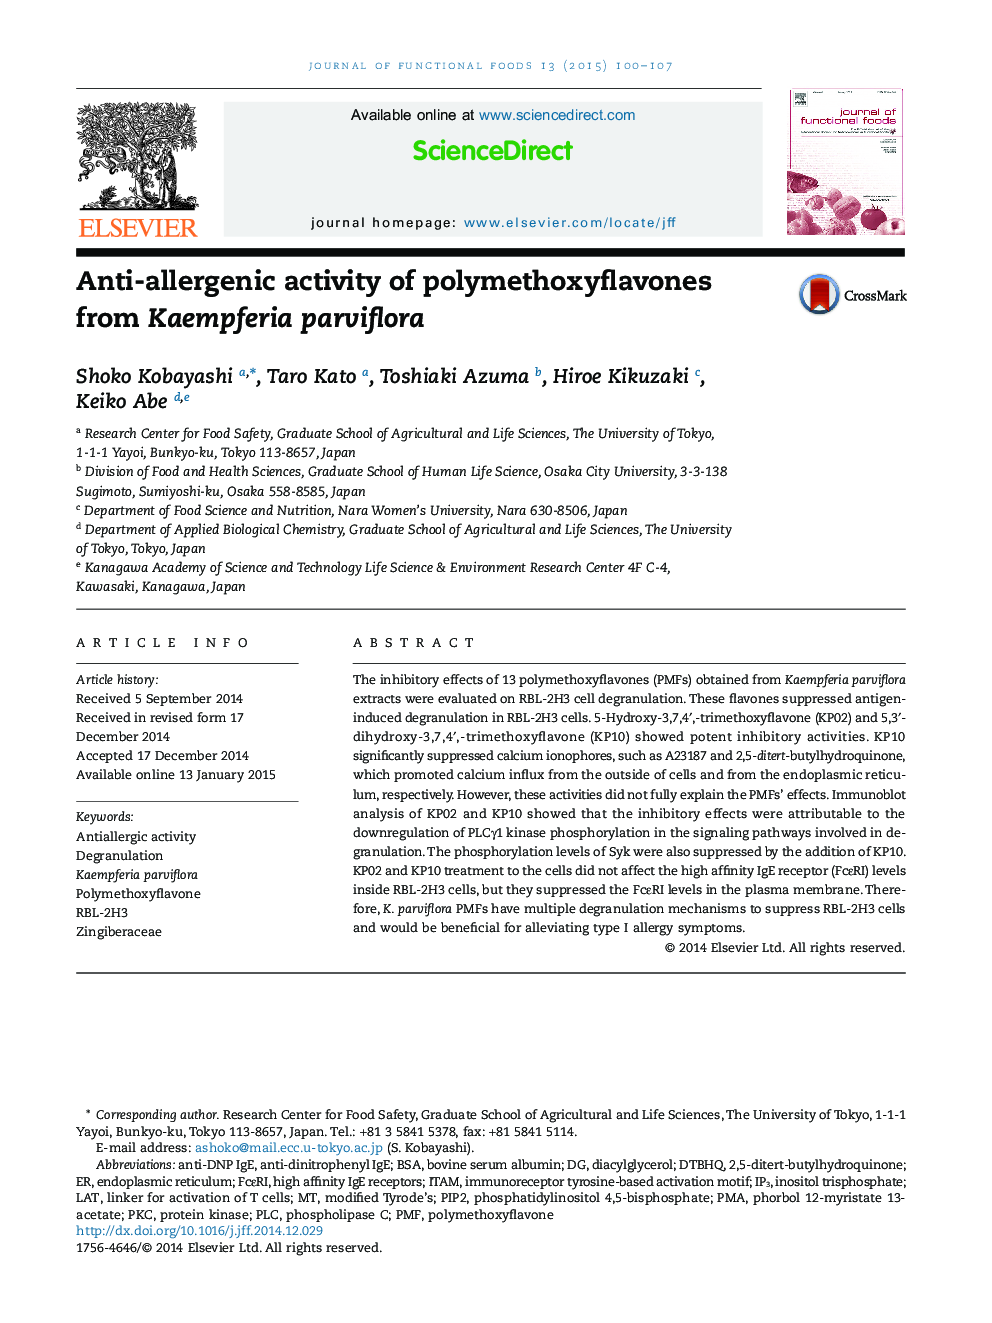 Anti-allergenic activity of polymethoxyflavones from Kaempferia parviflora